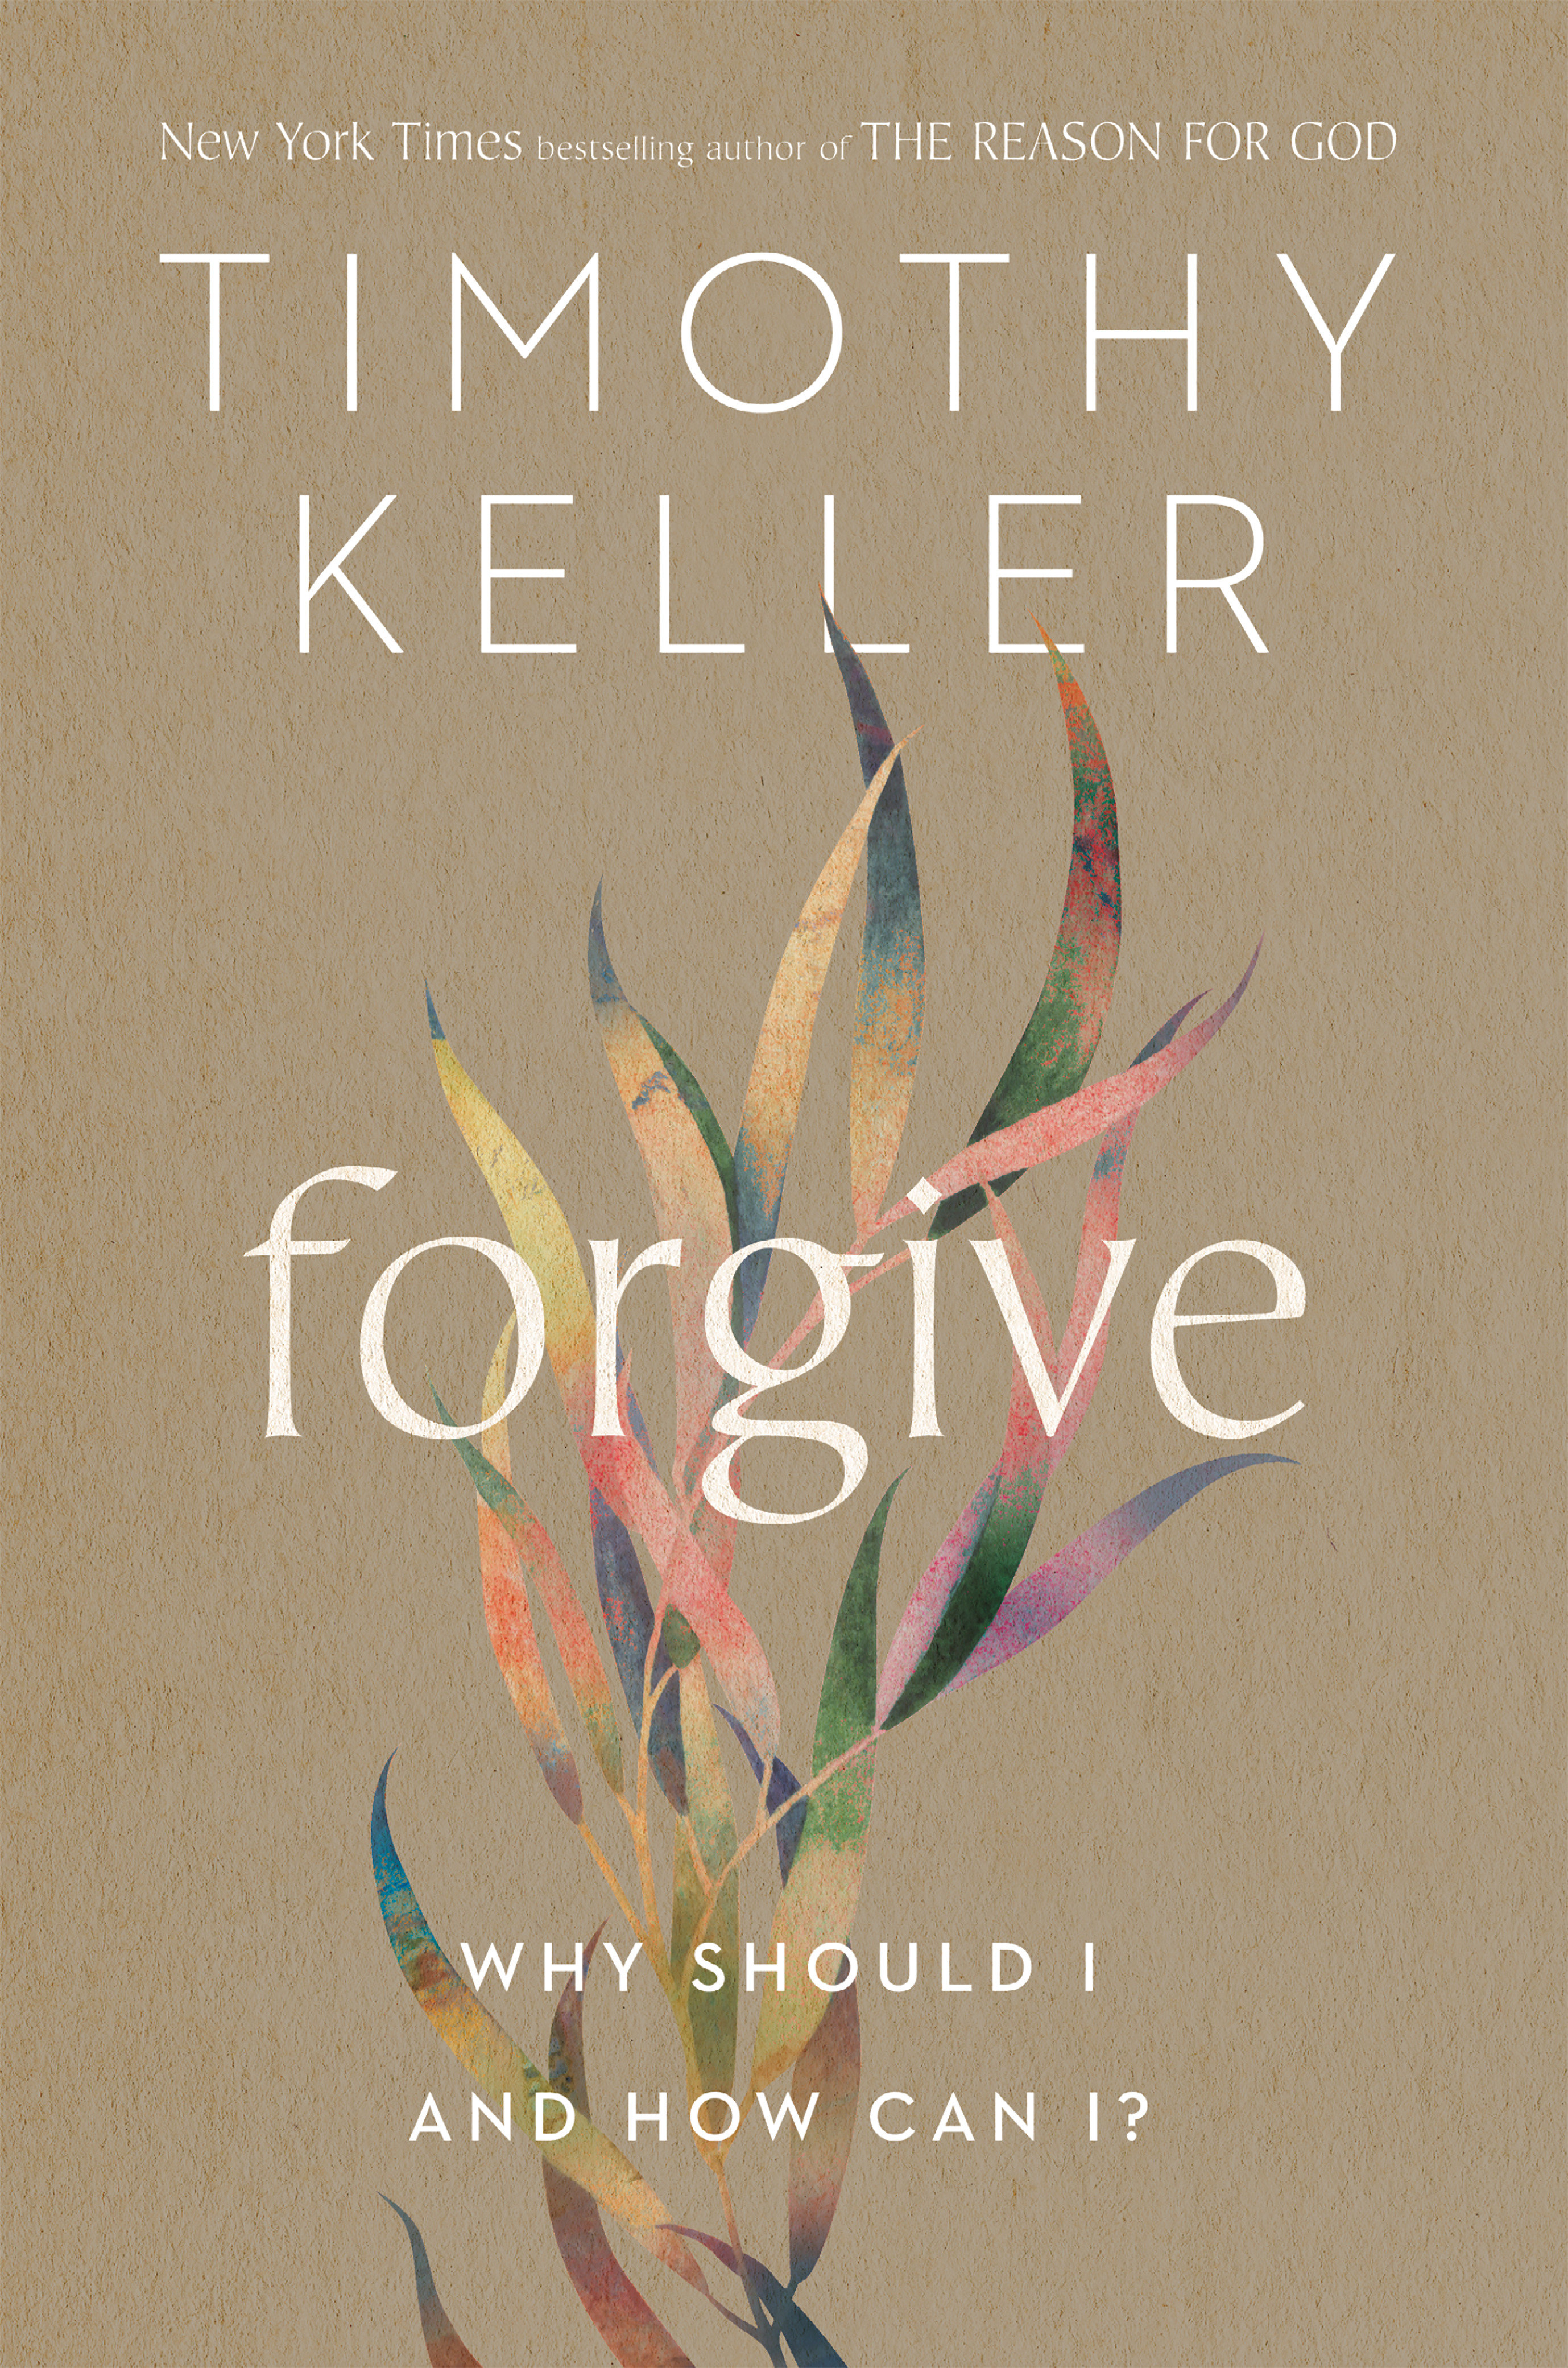 Forgive (Hardcover Book)